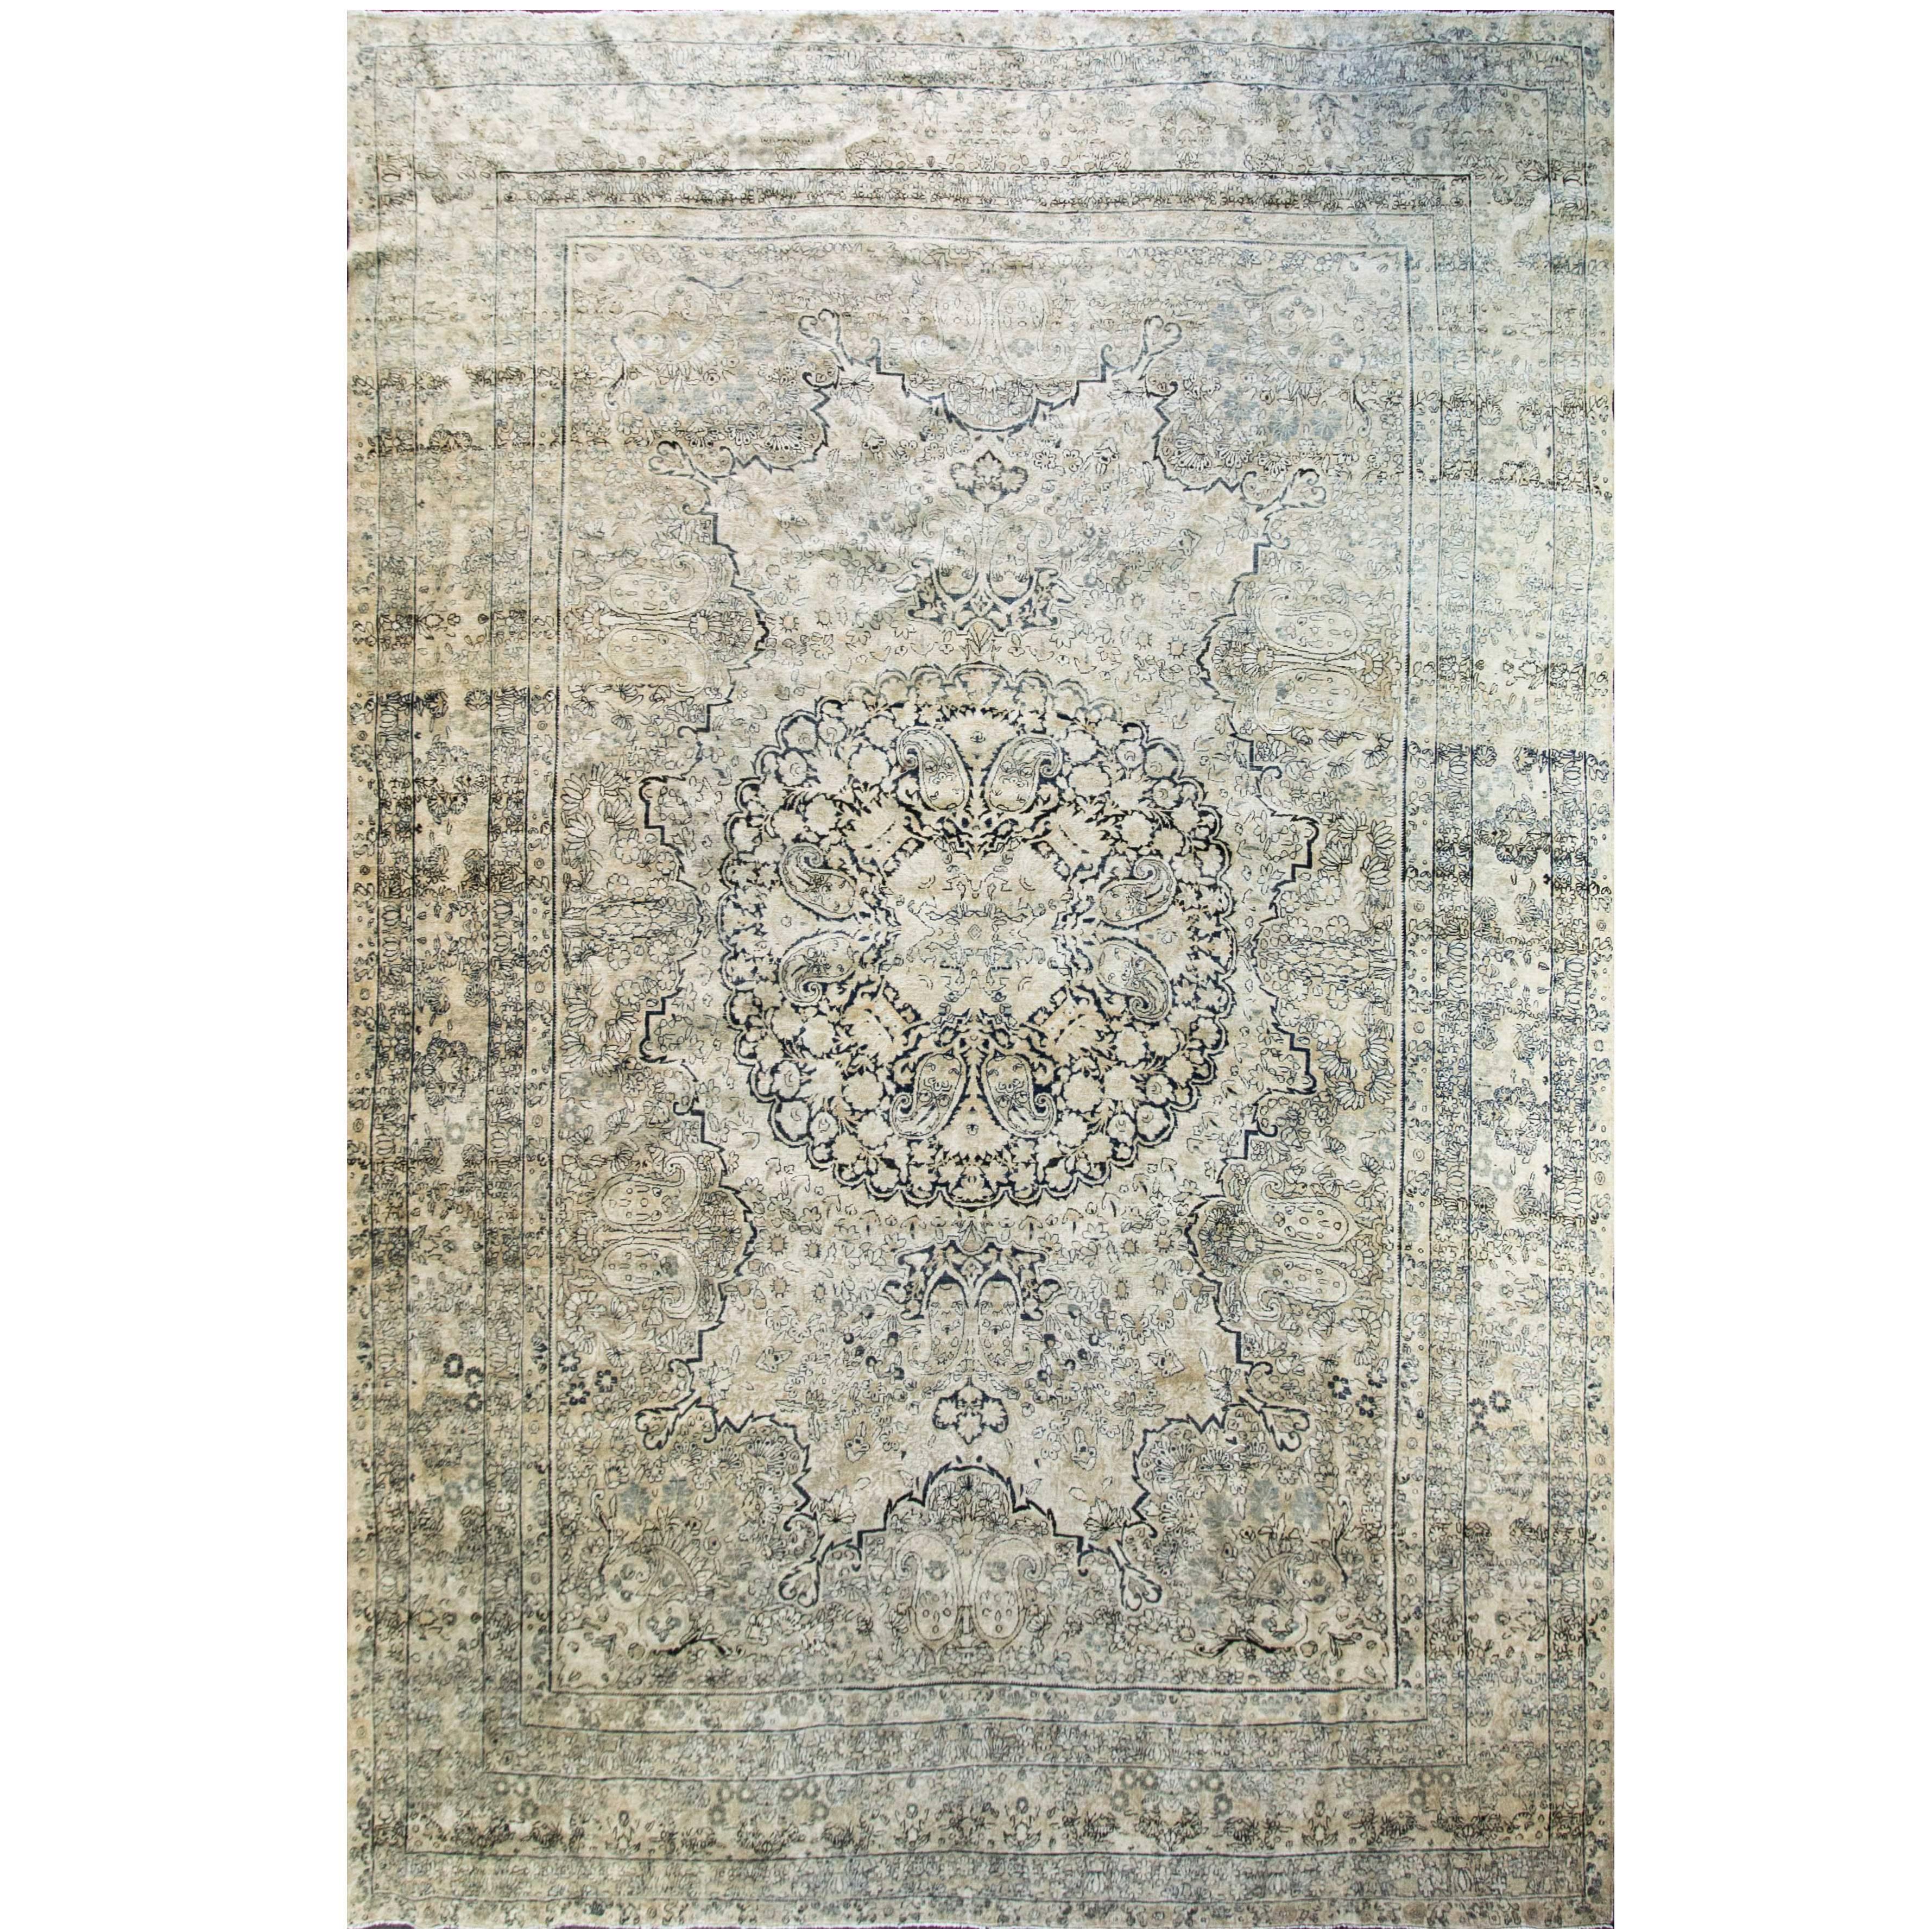  Antique Persian Kermanshah Carpet, 9'7" x 14'6"